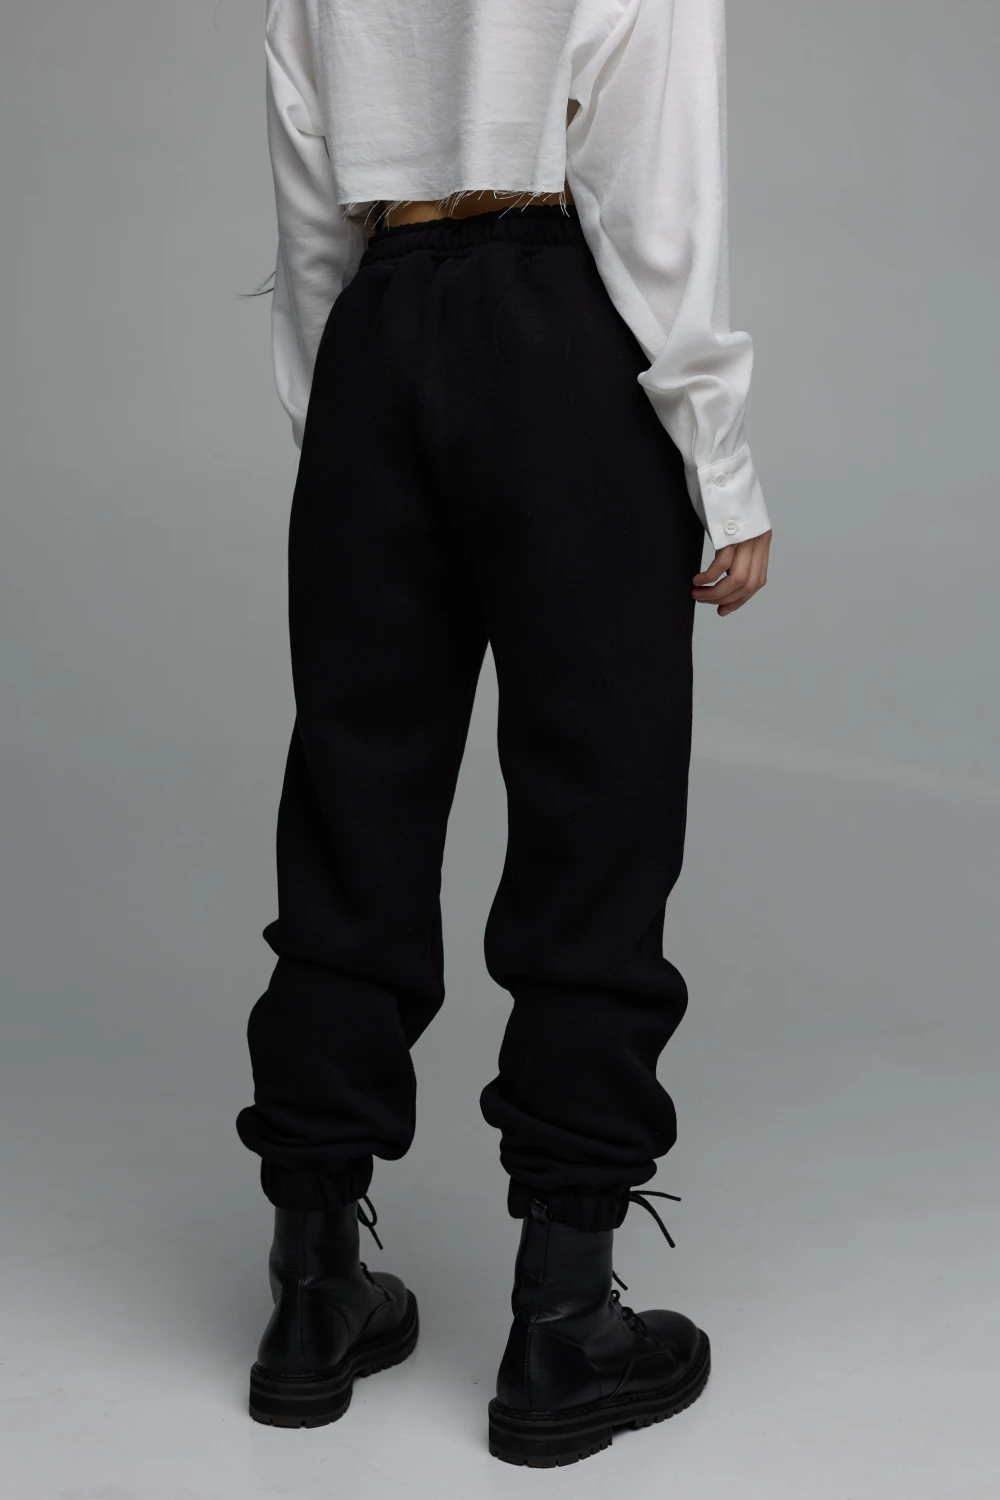 unisex warmed pants in black color